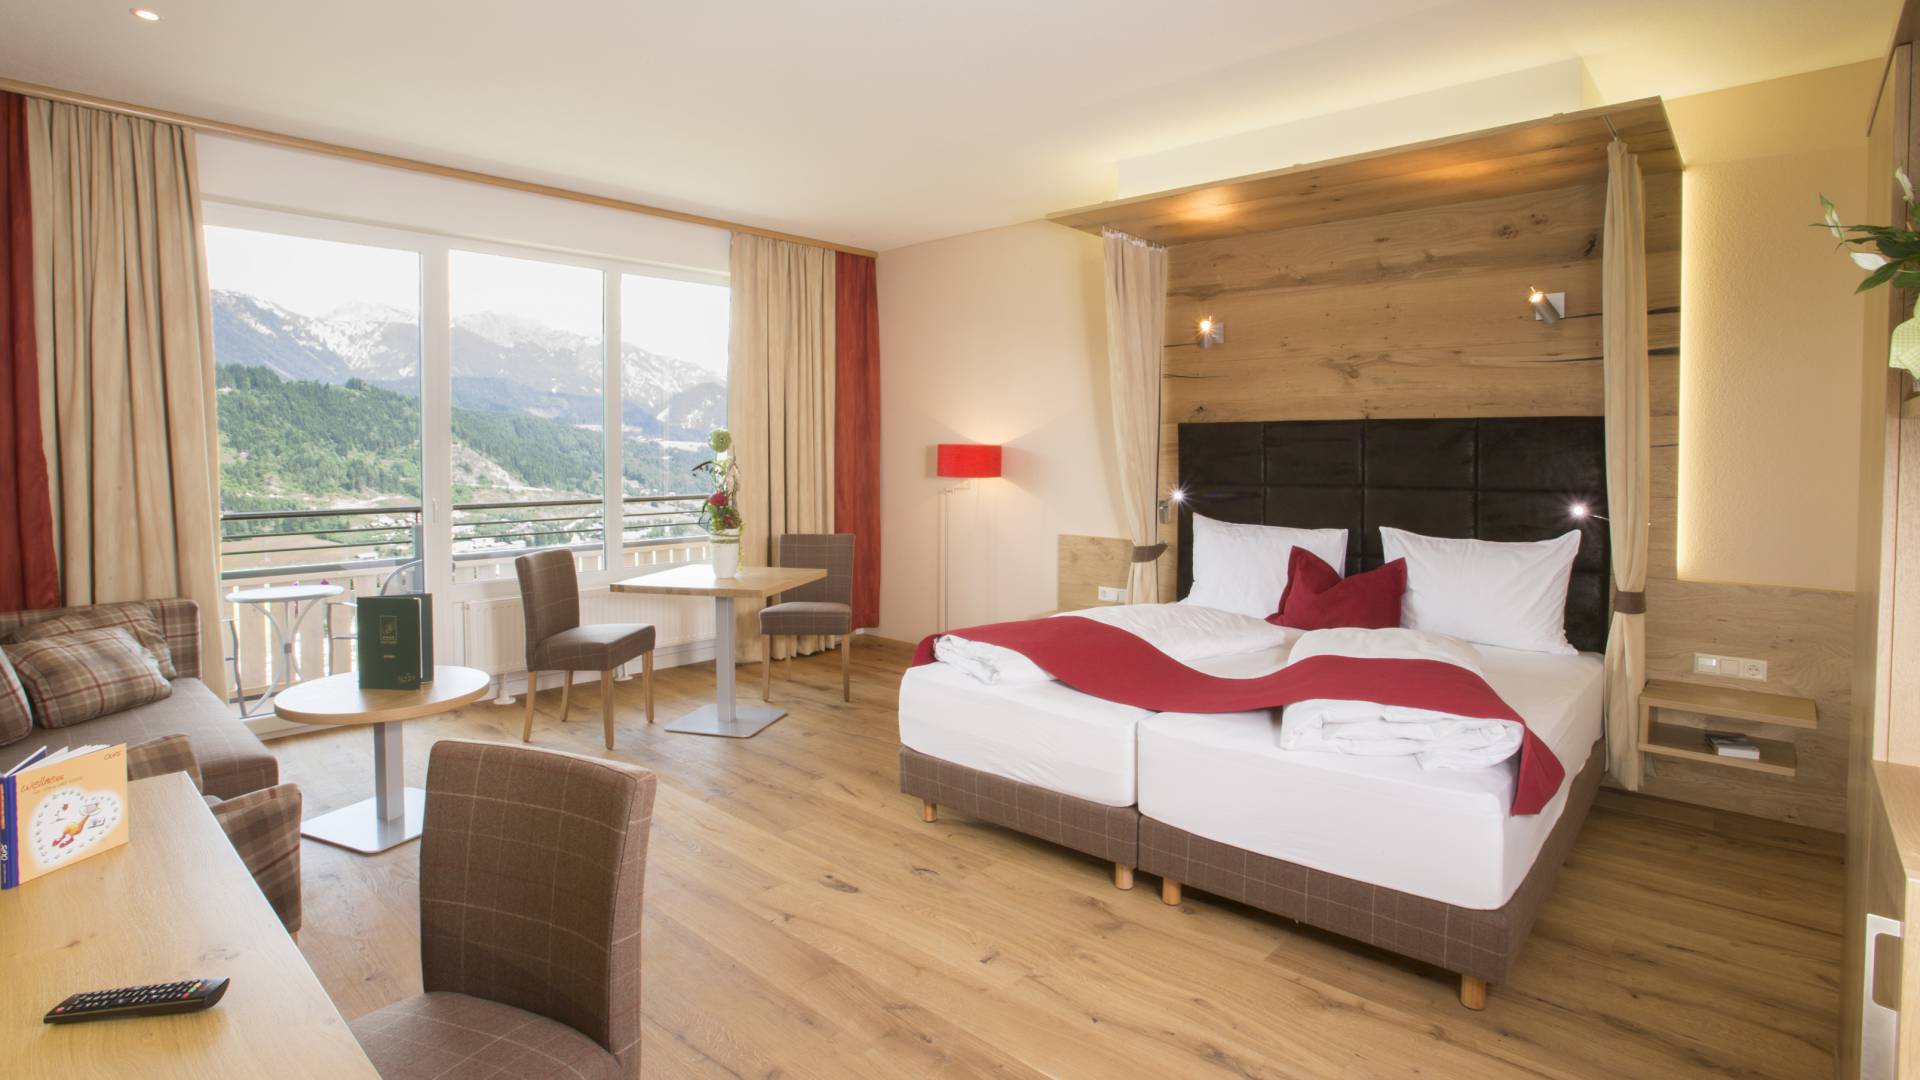 Rooms and suites in the hotel Schütterhof in Schladming Austria